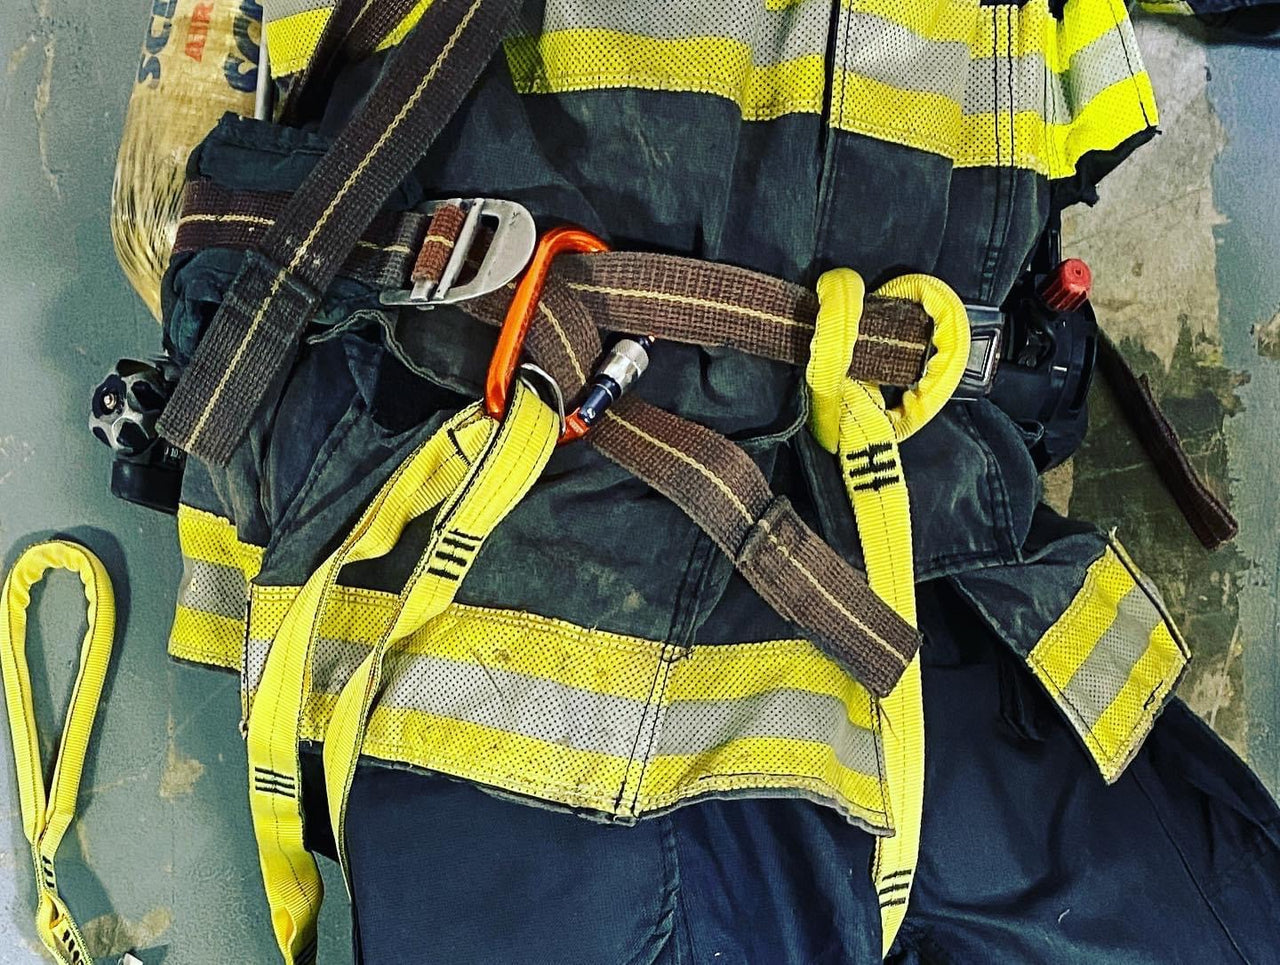 Anderson Rescue Strap (ARS) is – Coastal Fire Training, LLC